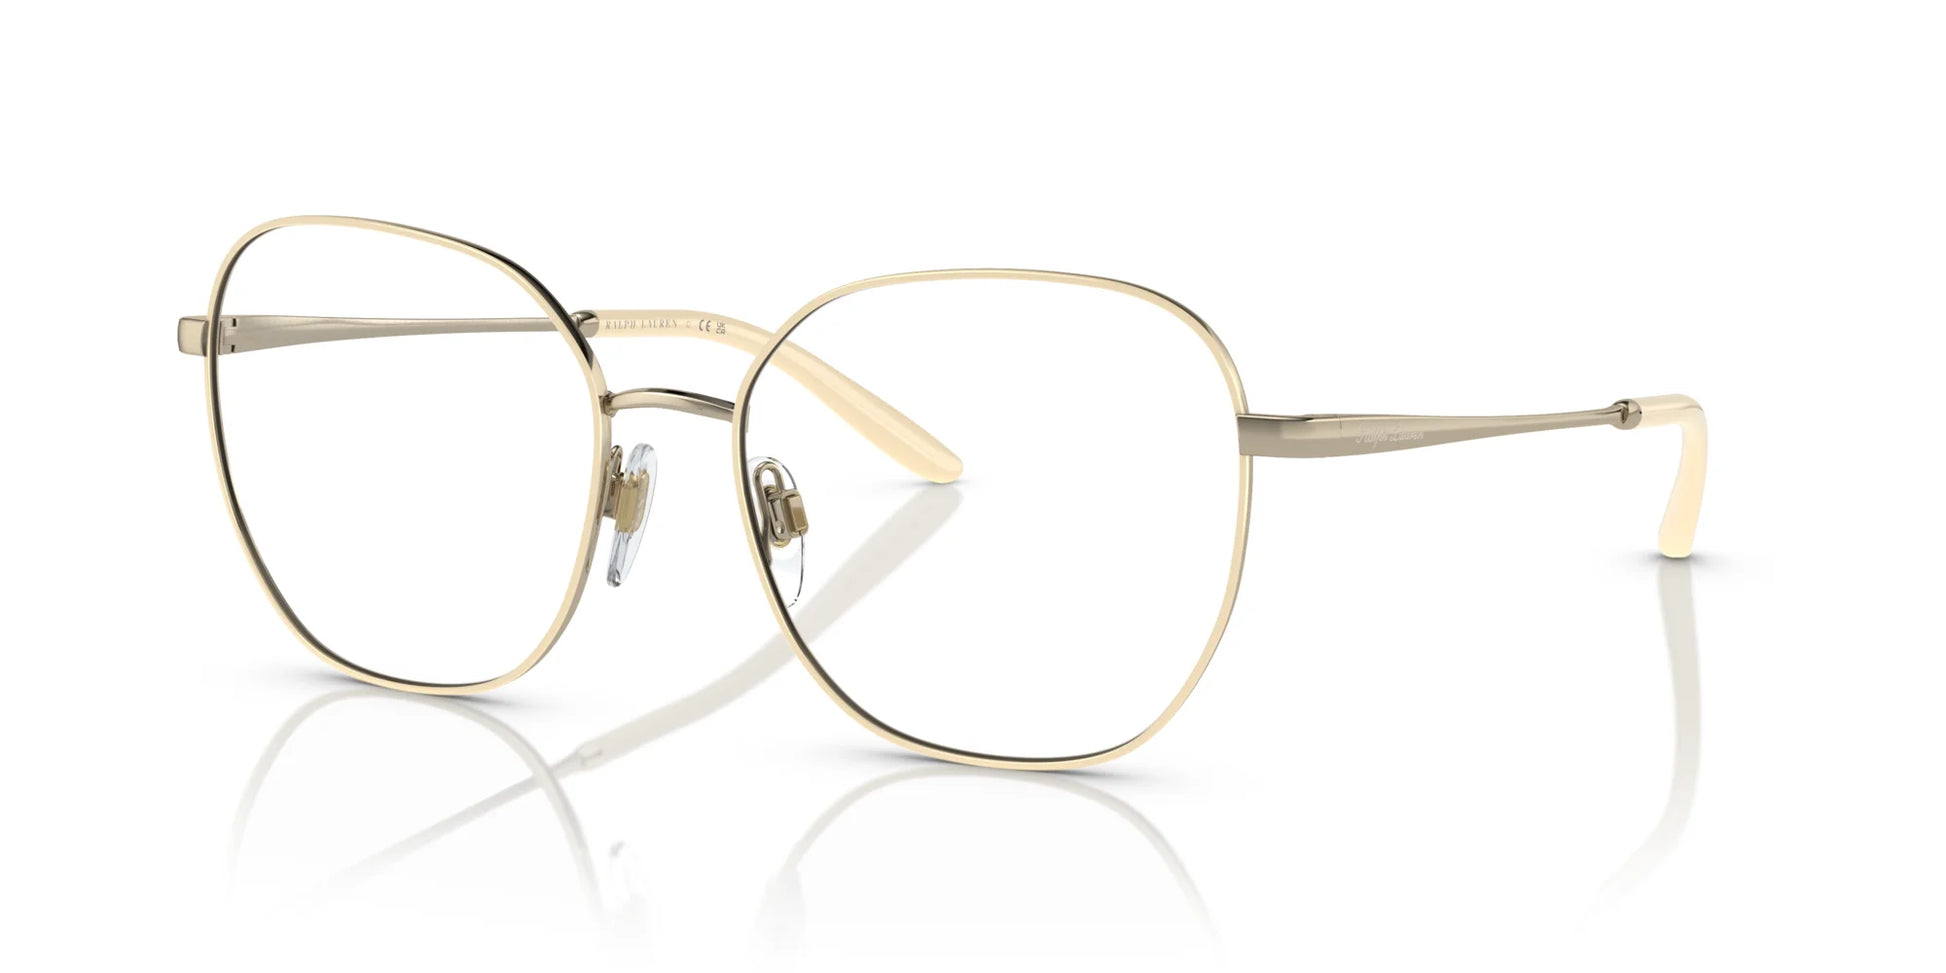 Ralph Lauren RL5120 Eyeglasses Cream / Pale Gold